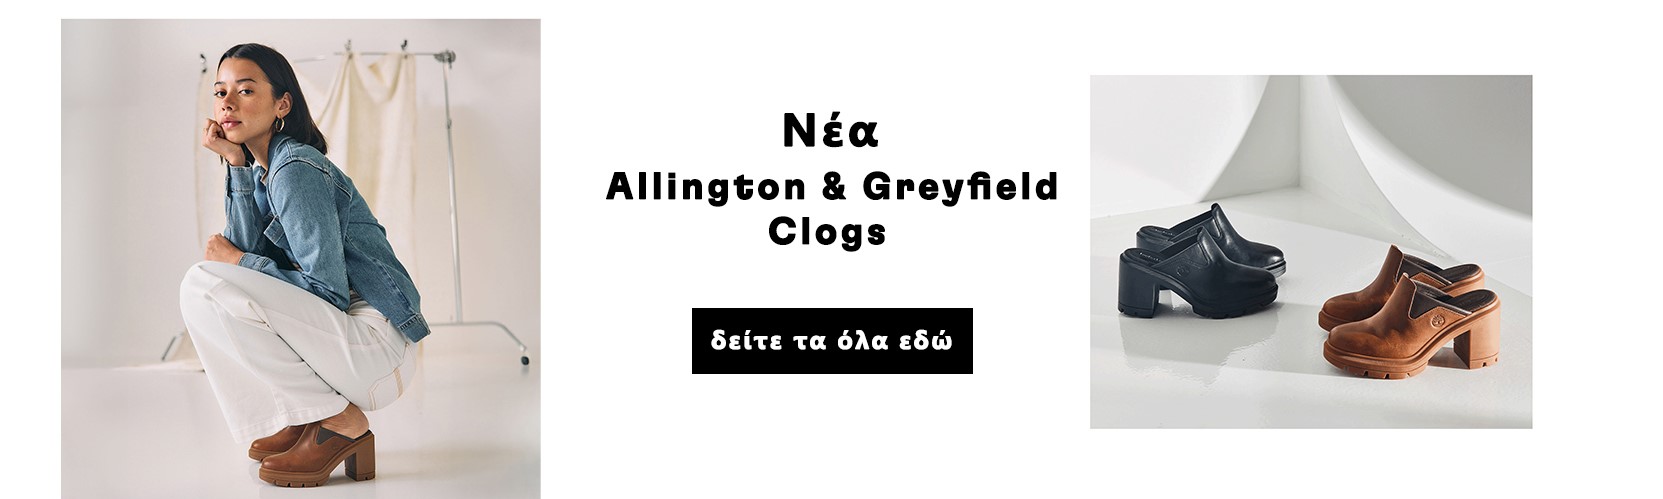 Allington-Greyfield Clogs